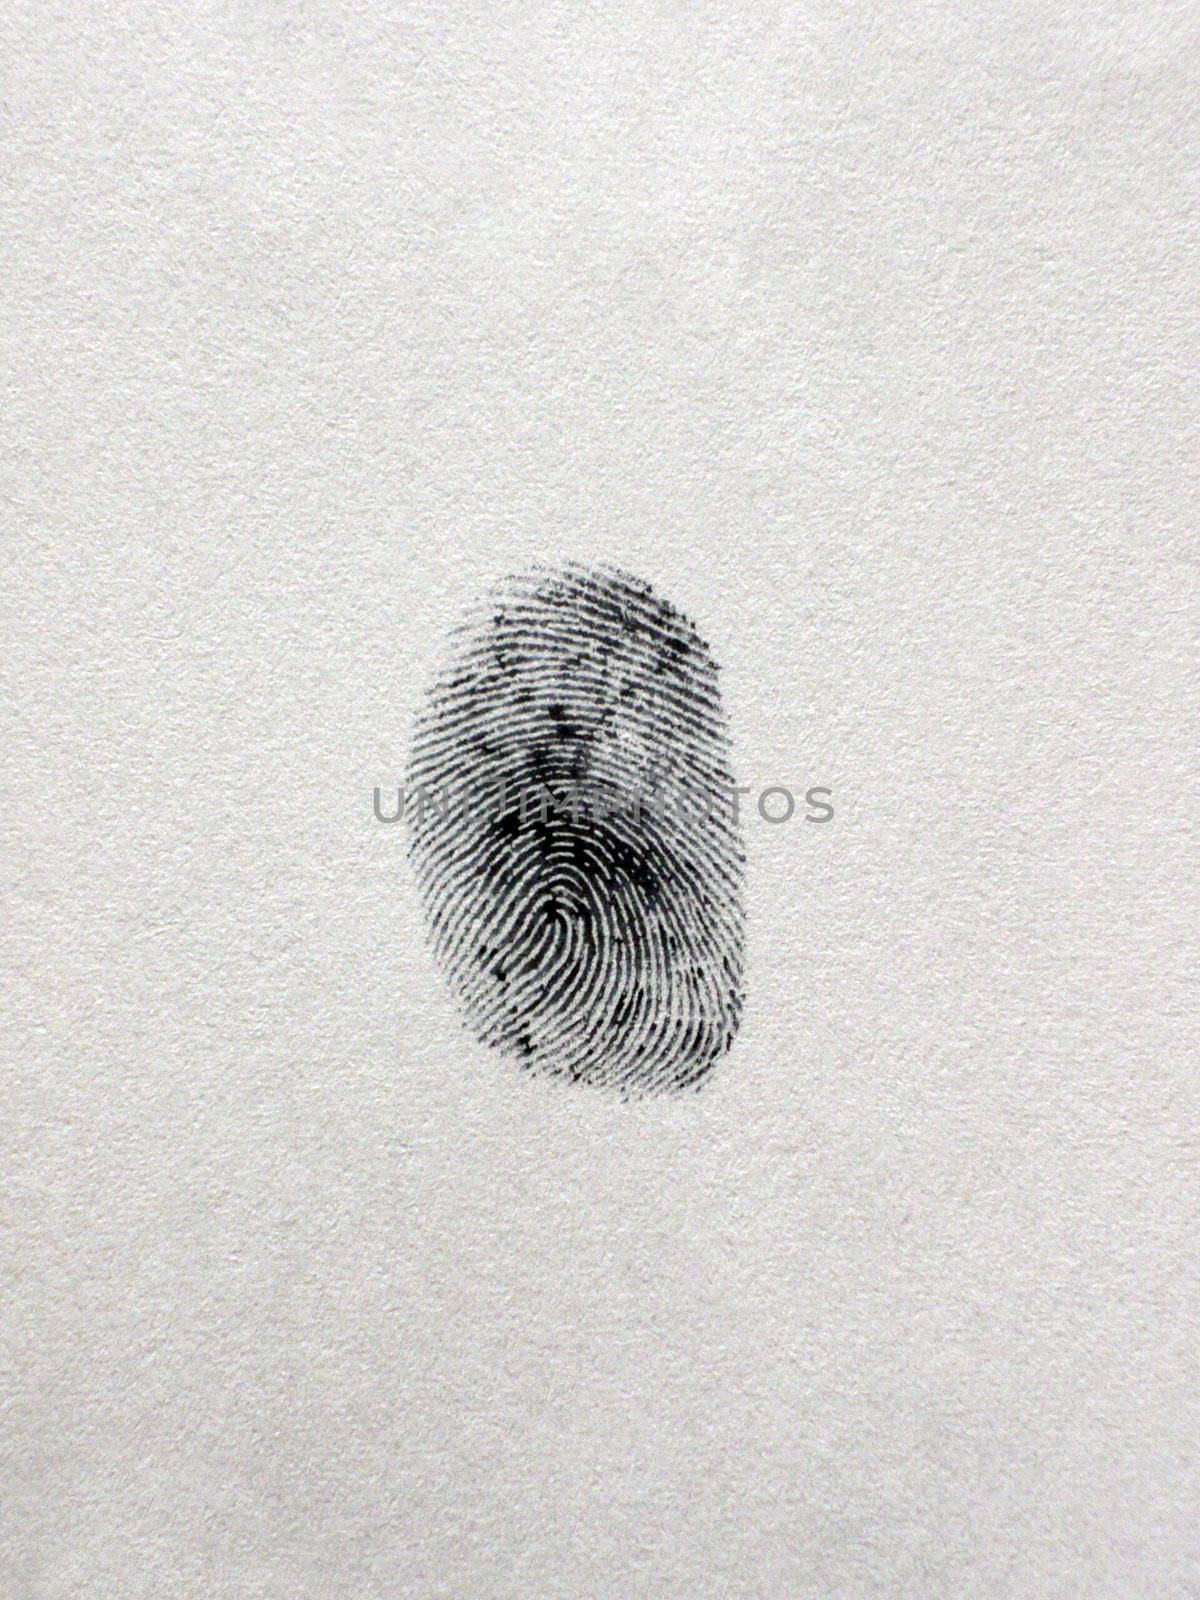 A fingerprint by dutourdumonde